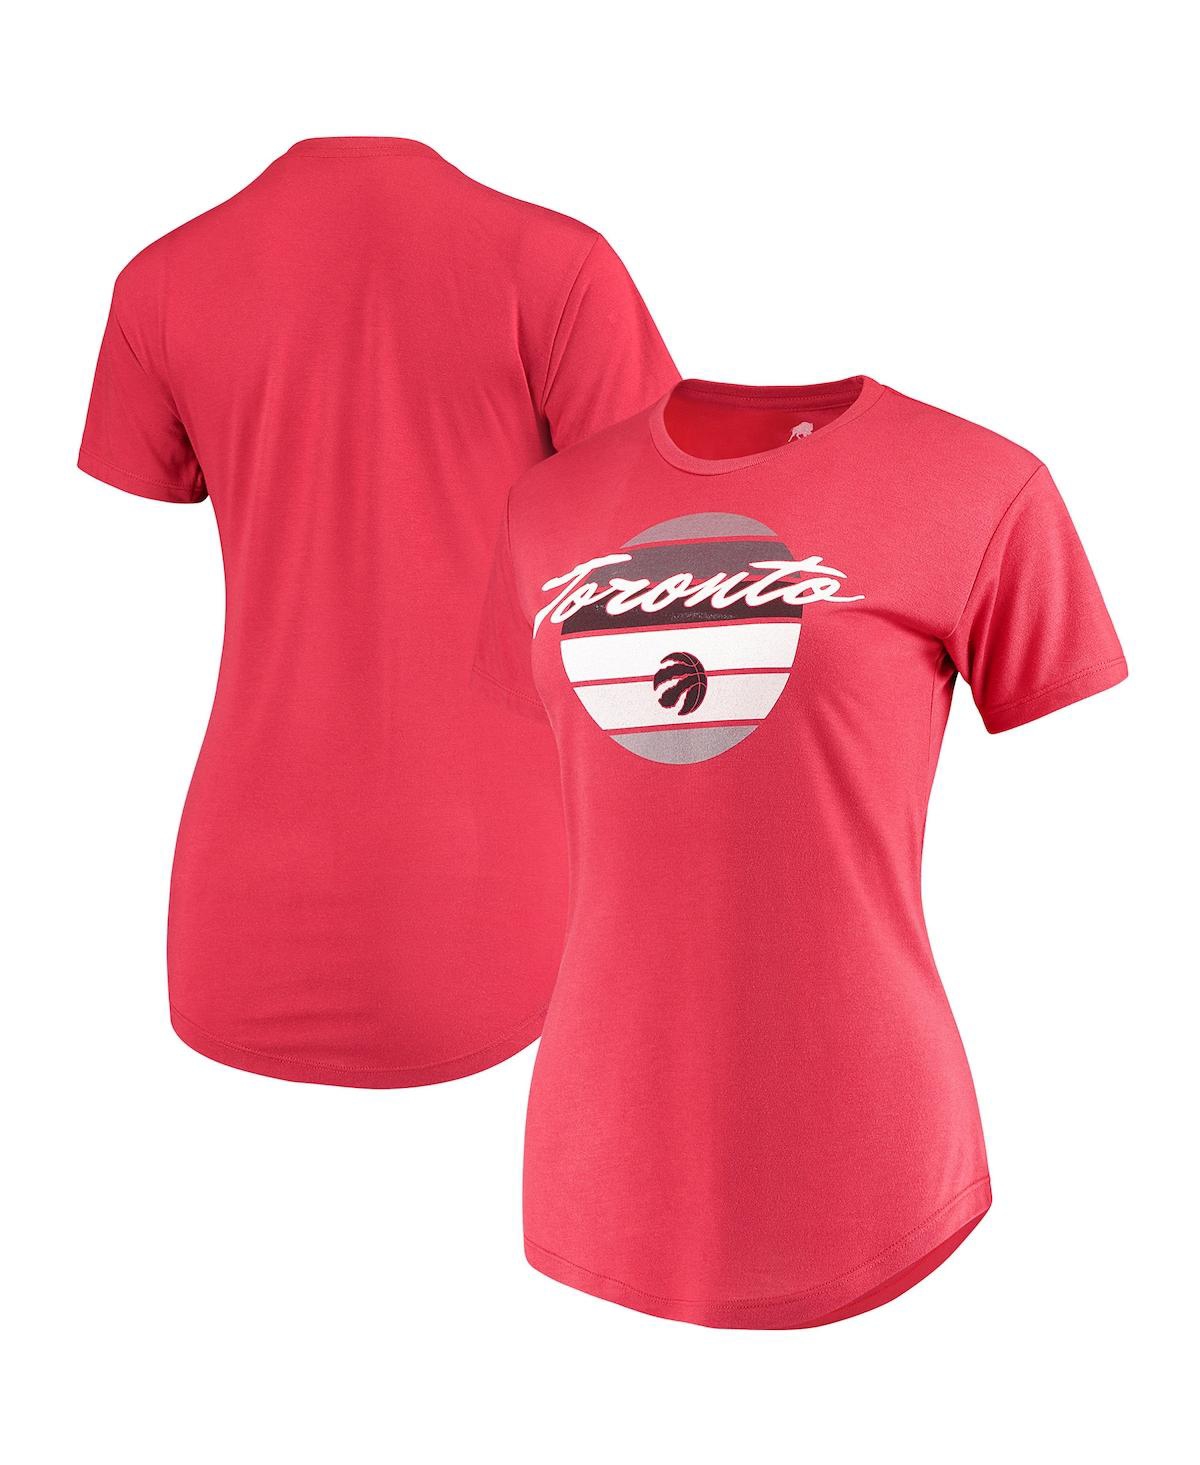 Women's Sportiqe Red Toronto Raptors Phoebe Super Soft Tri-Blend T-shirt - Red